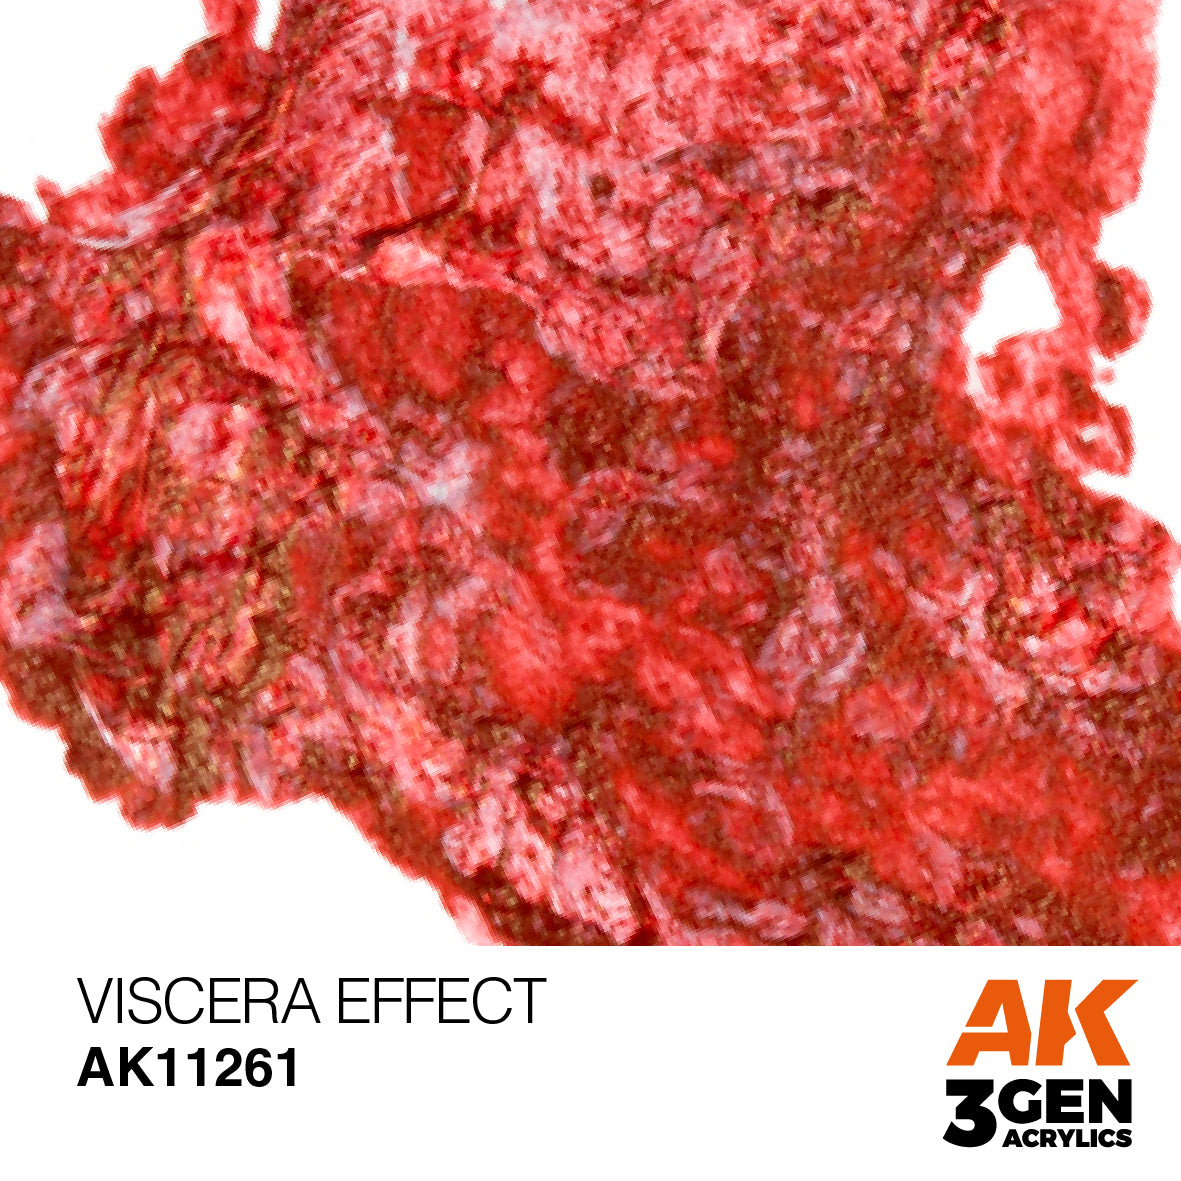 AK11261: Visceral Effects